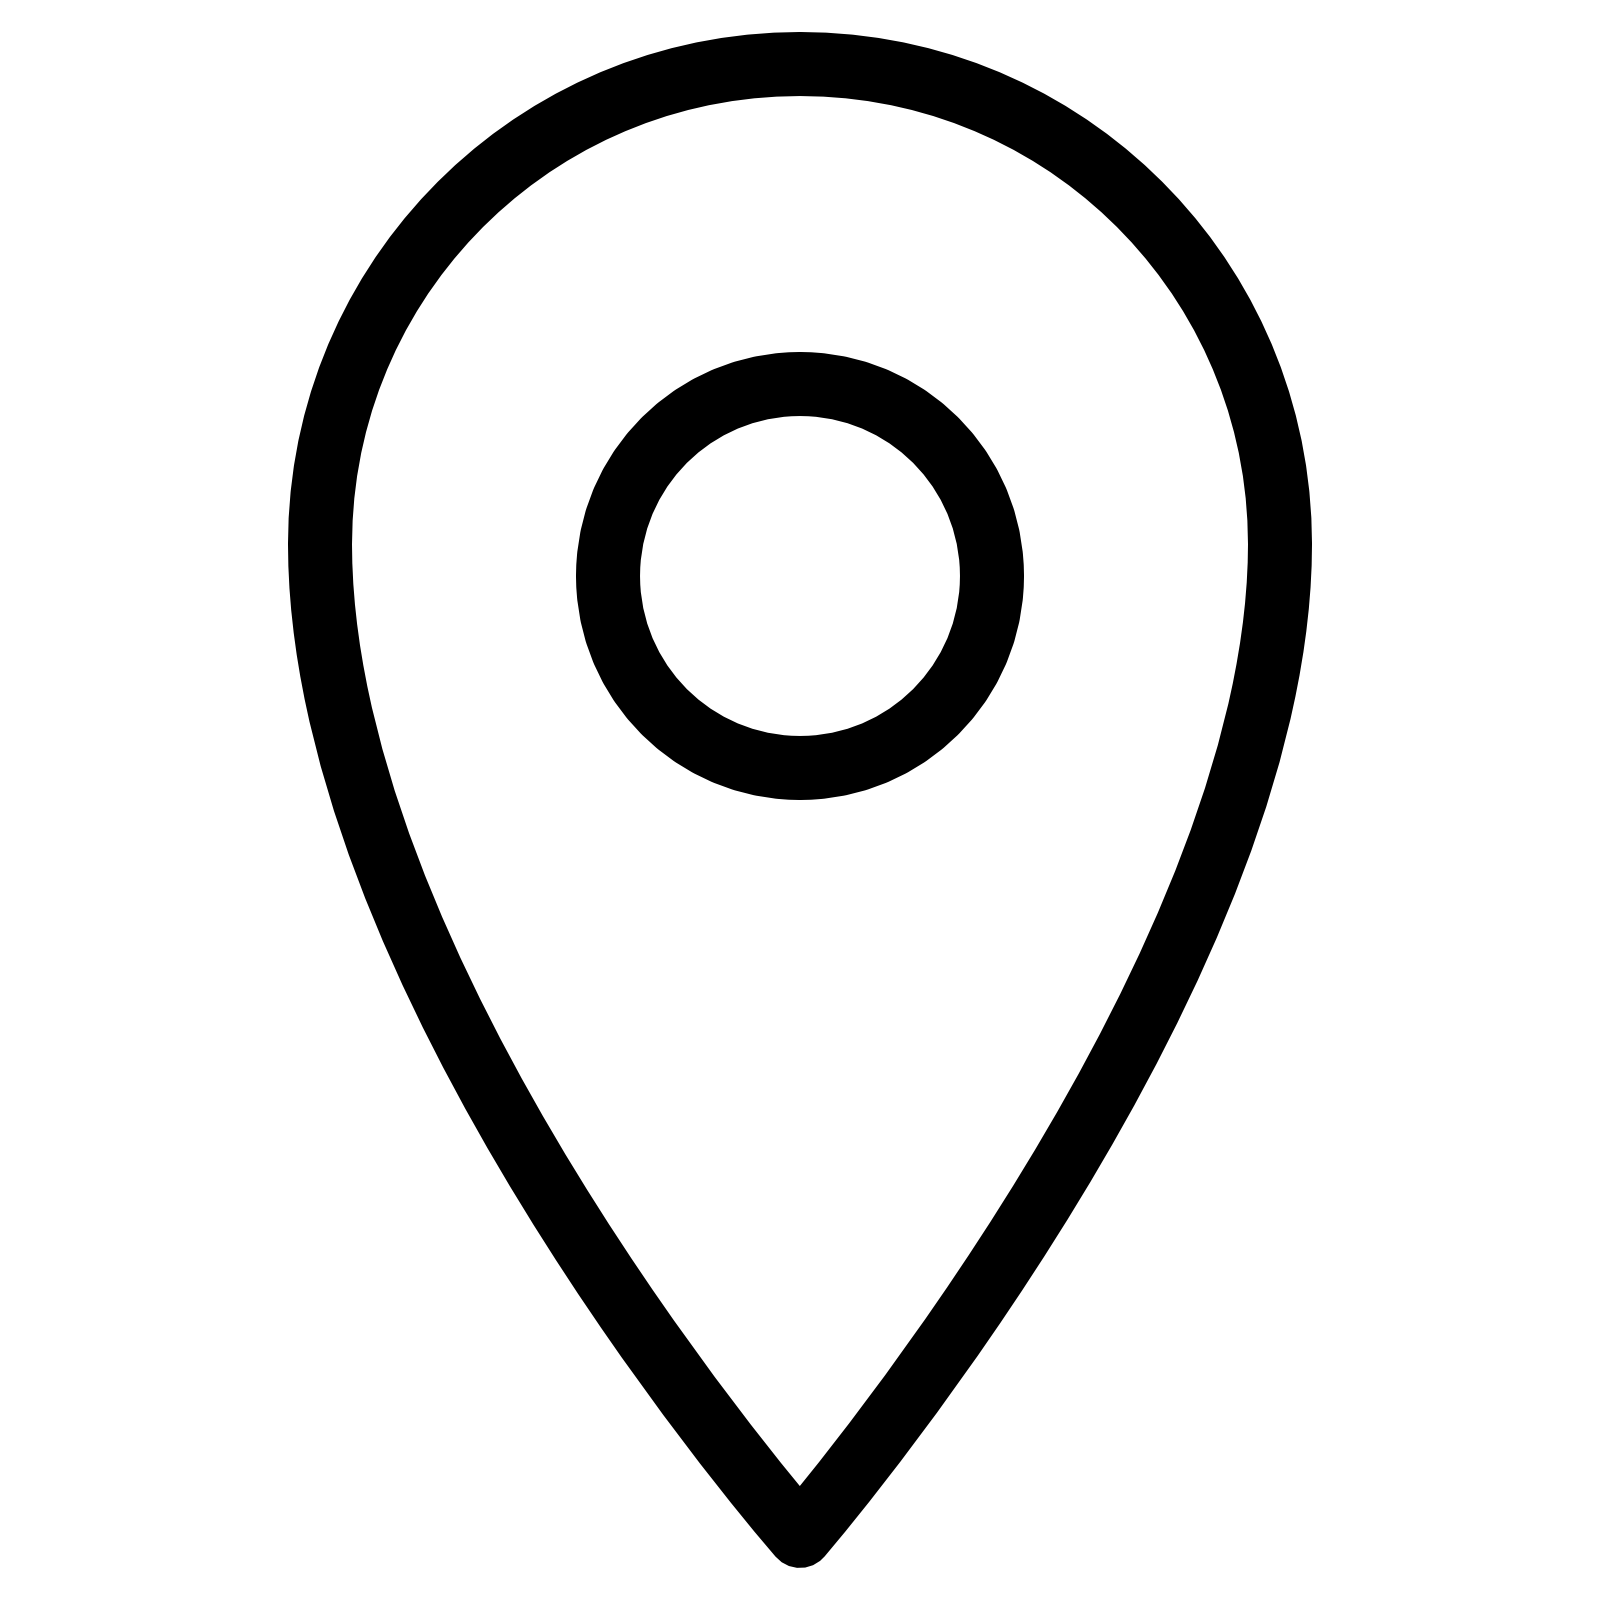 location icon map